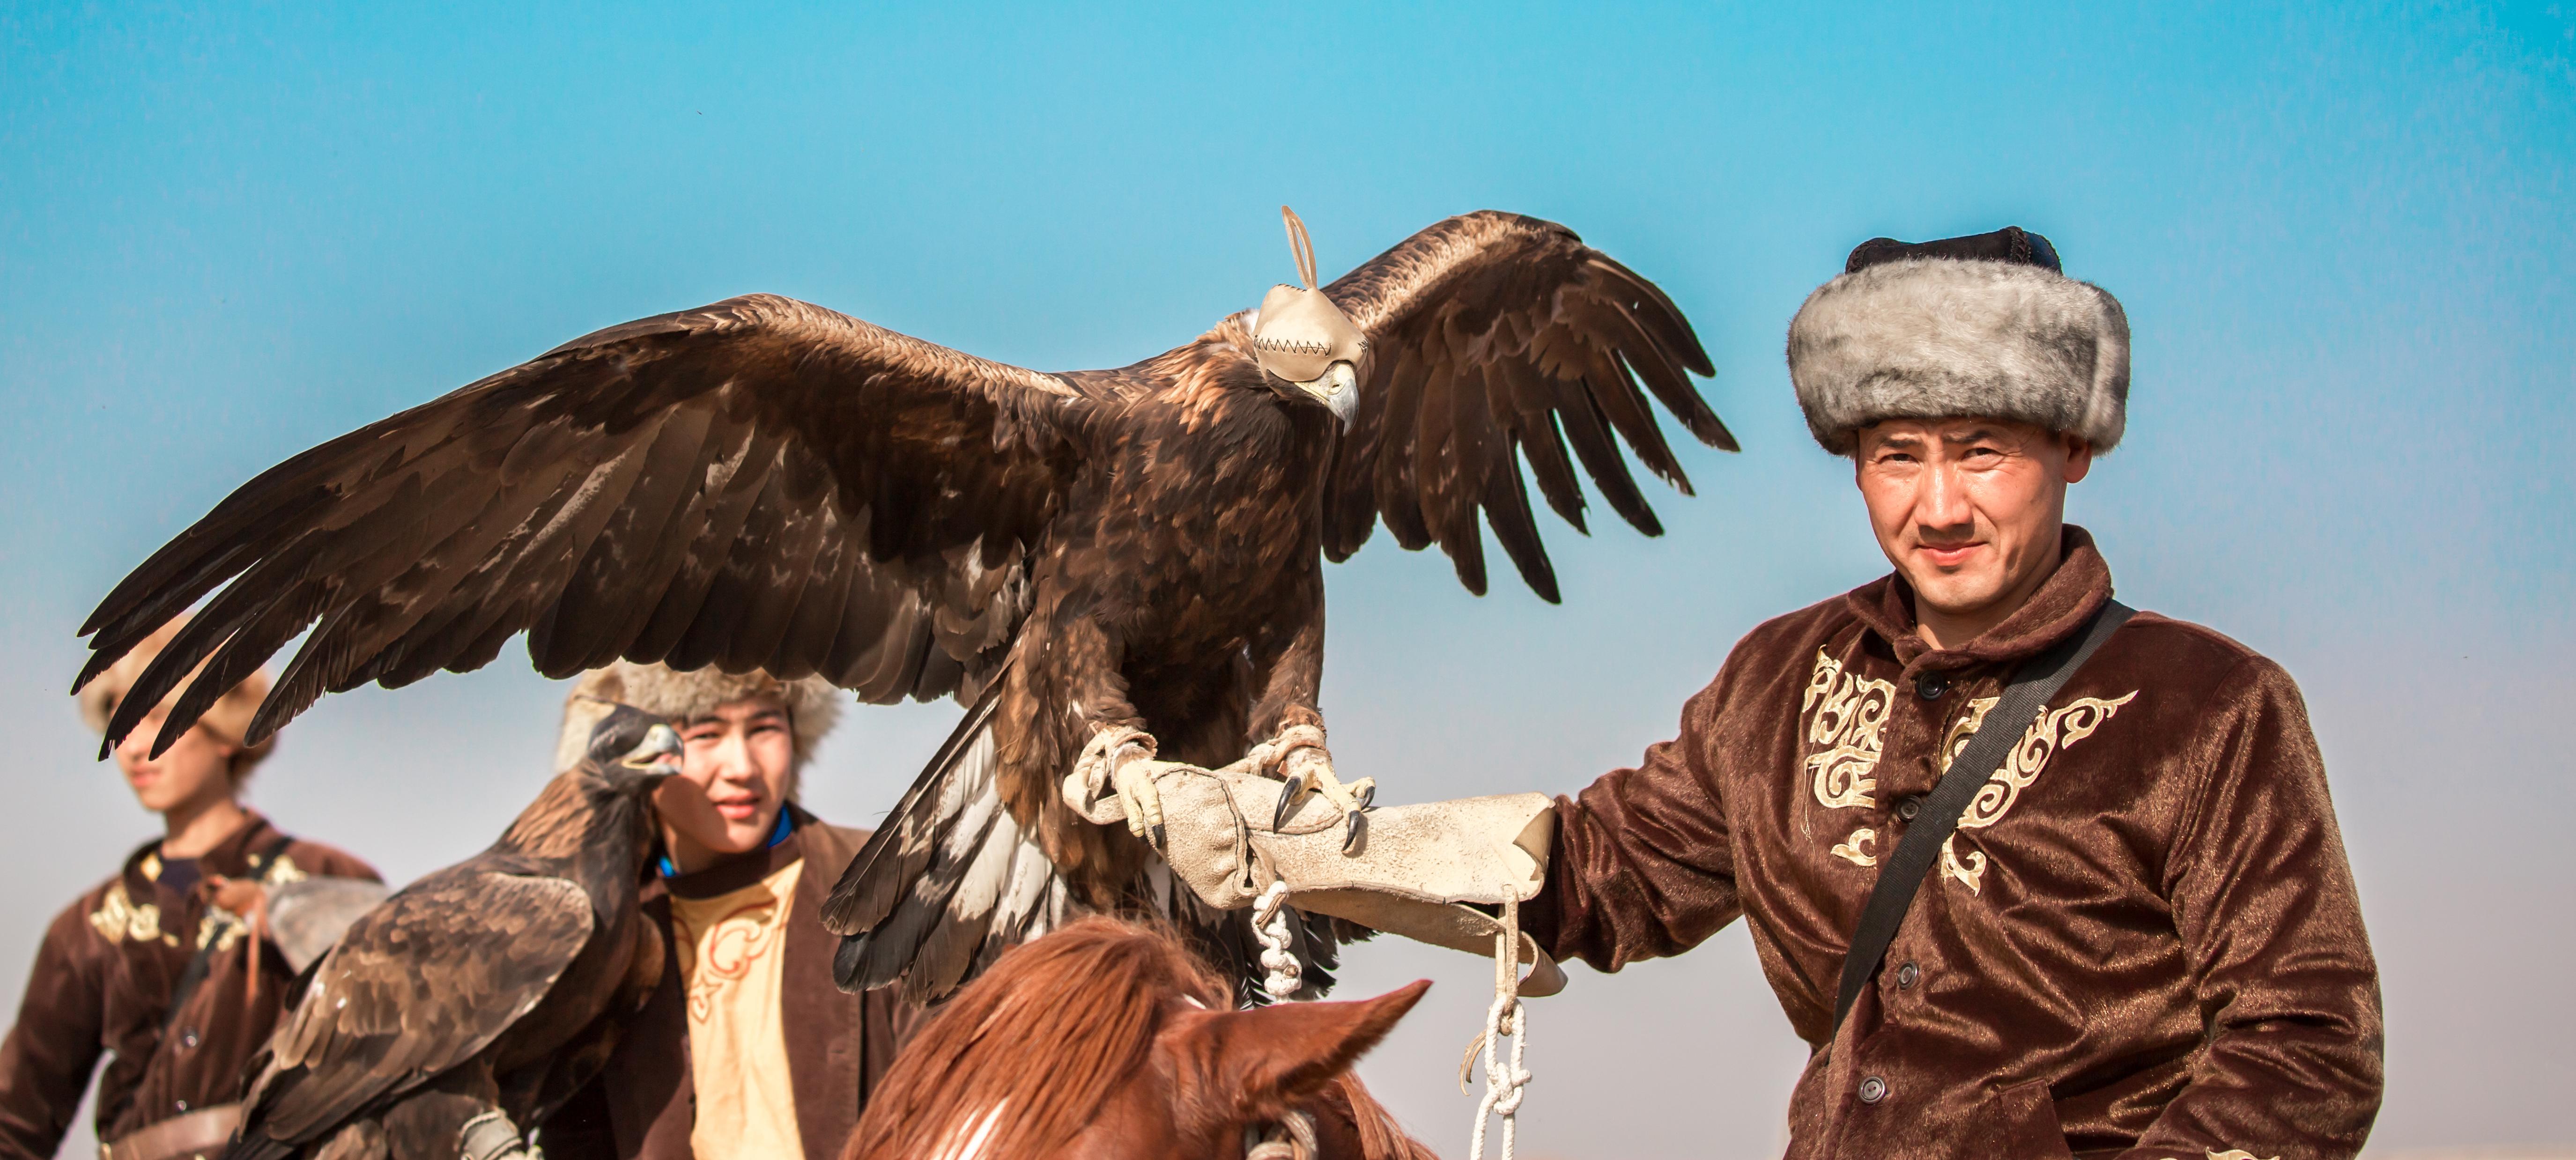 Golden Eagle Festival in Kazakhstan